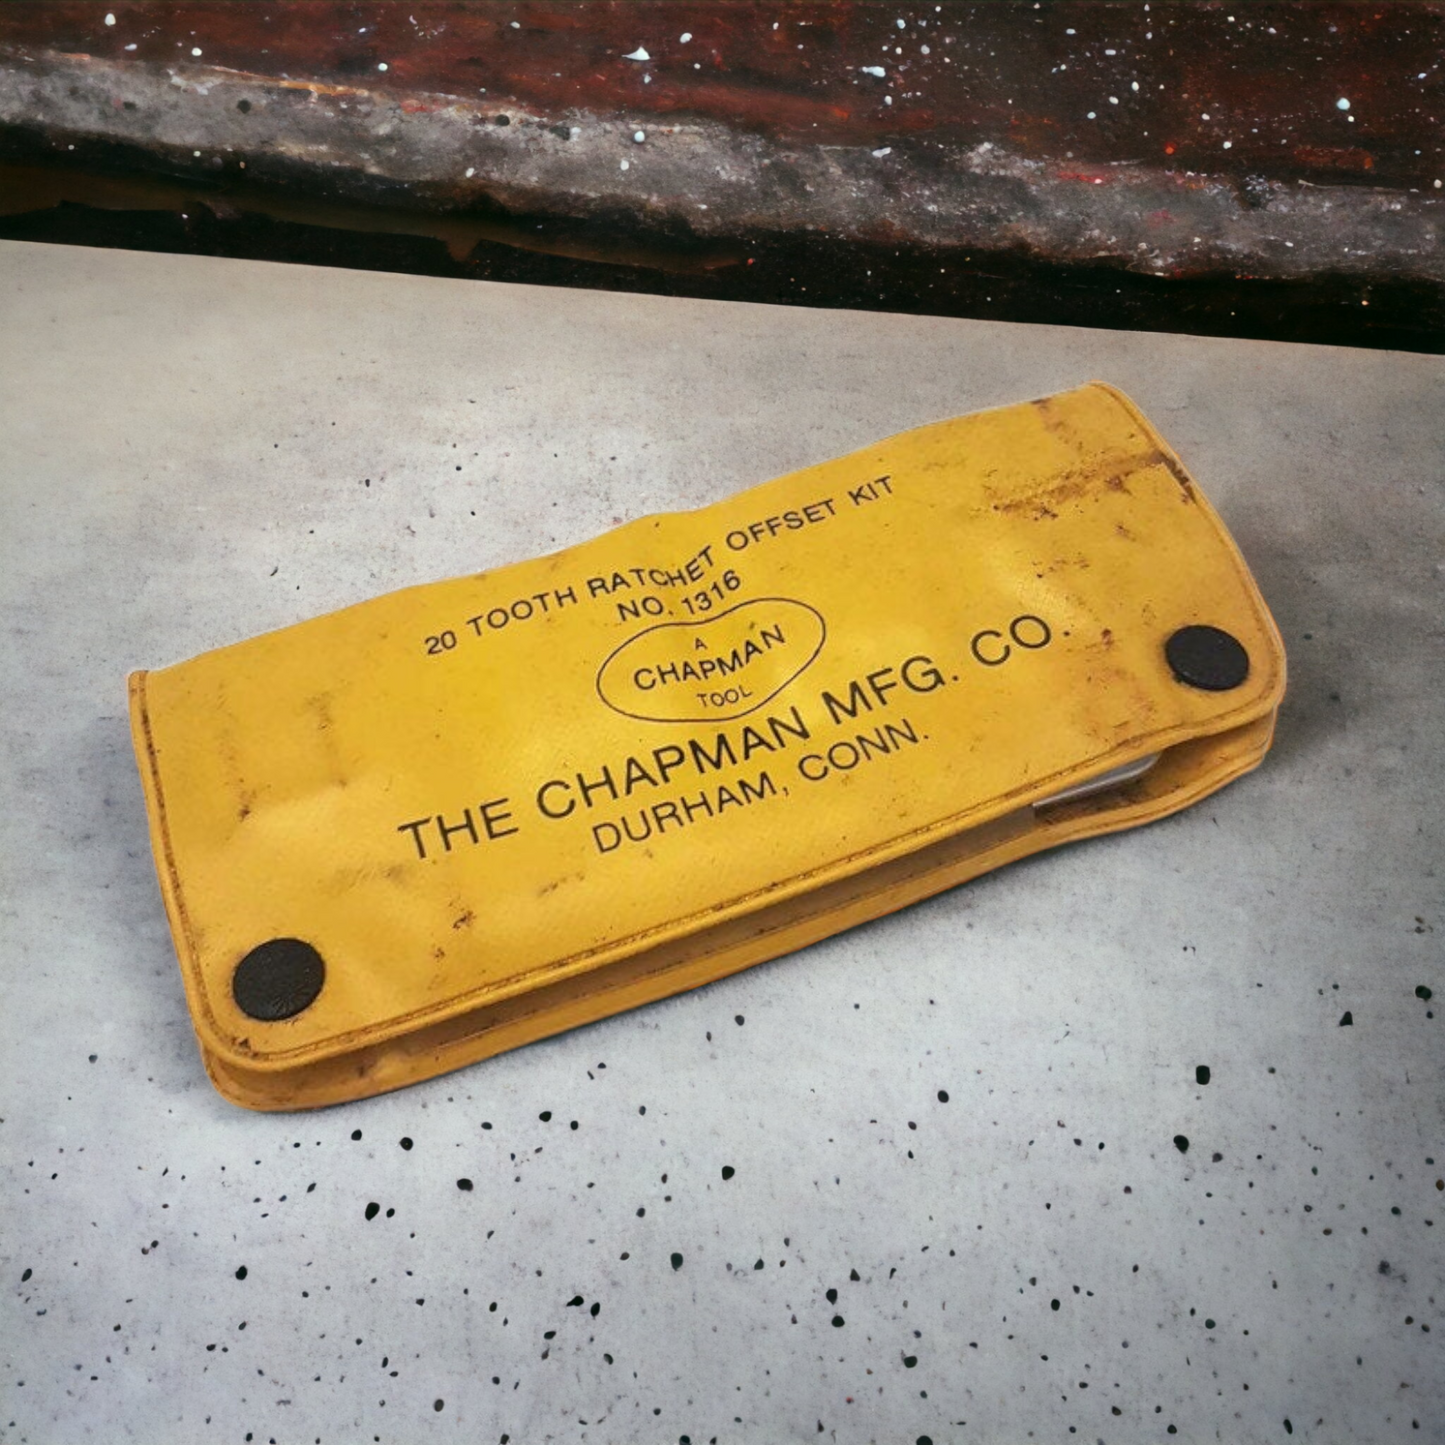 The Chapman Mfg. Co. 20 Tooth Ratchet Offset Kit Driver Kit 16 Pcs. Multi Bit Set No.1316